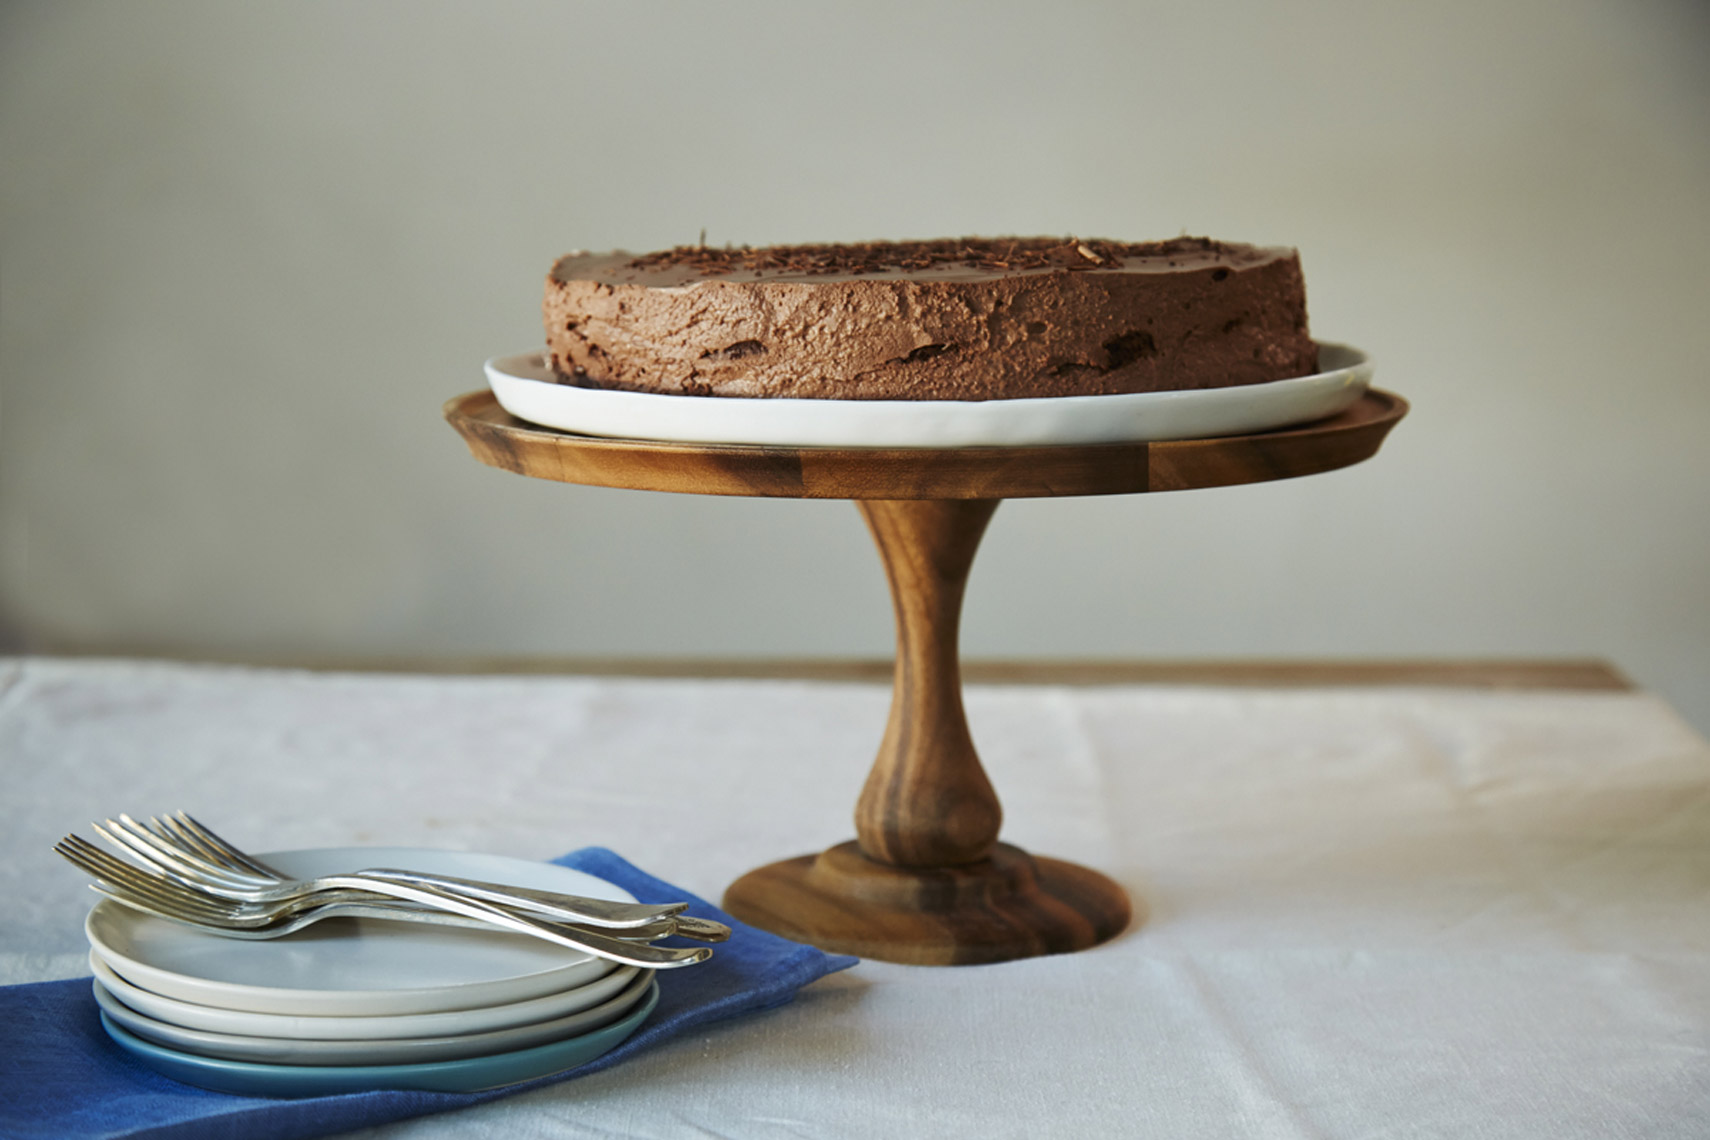 AlanCampbellPhotography, Yummy Chocolate tart.